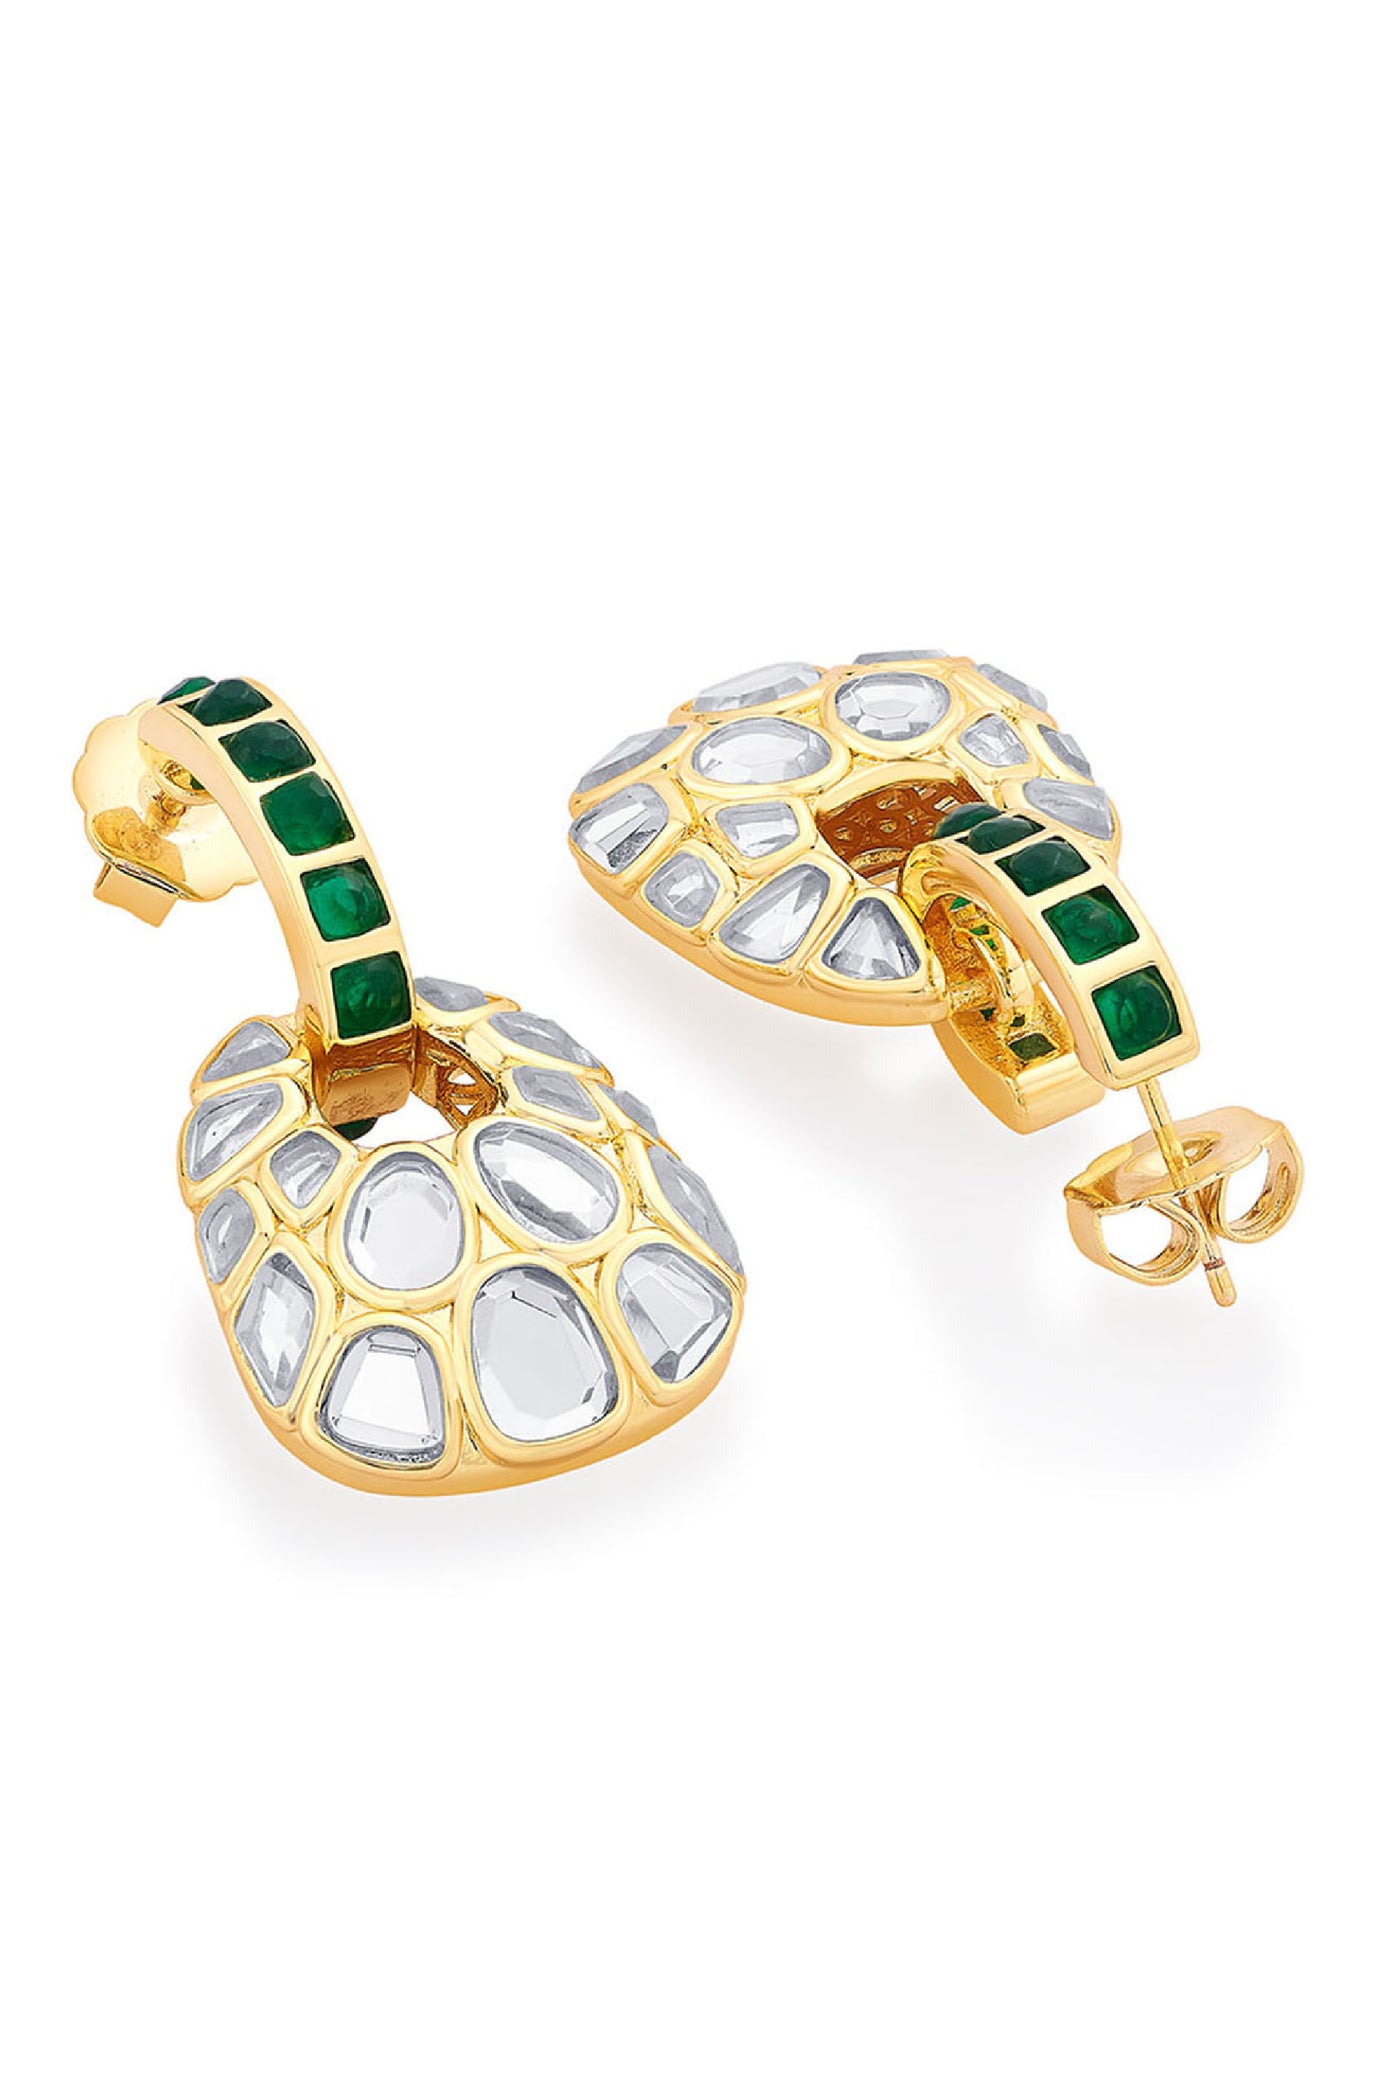 Isharya Fiesta Hydro Emerald Earrings jewellery indian designer wear online shopping melange singapore